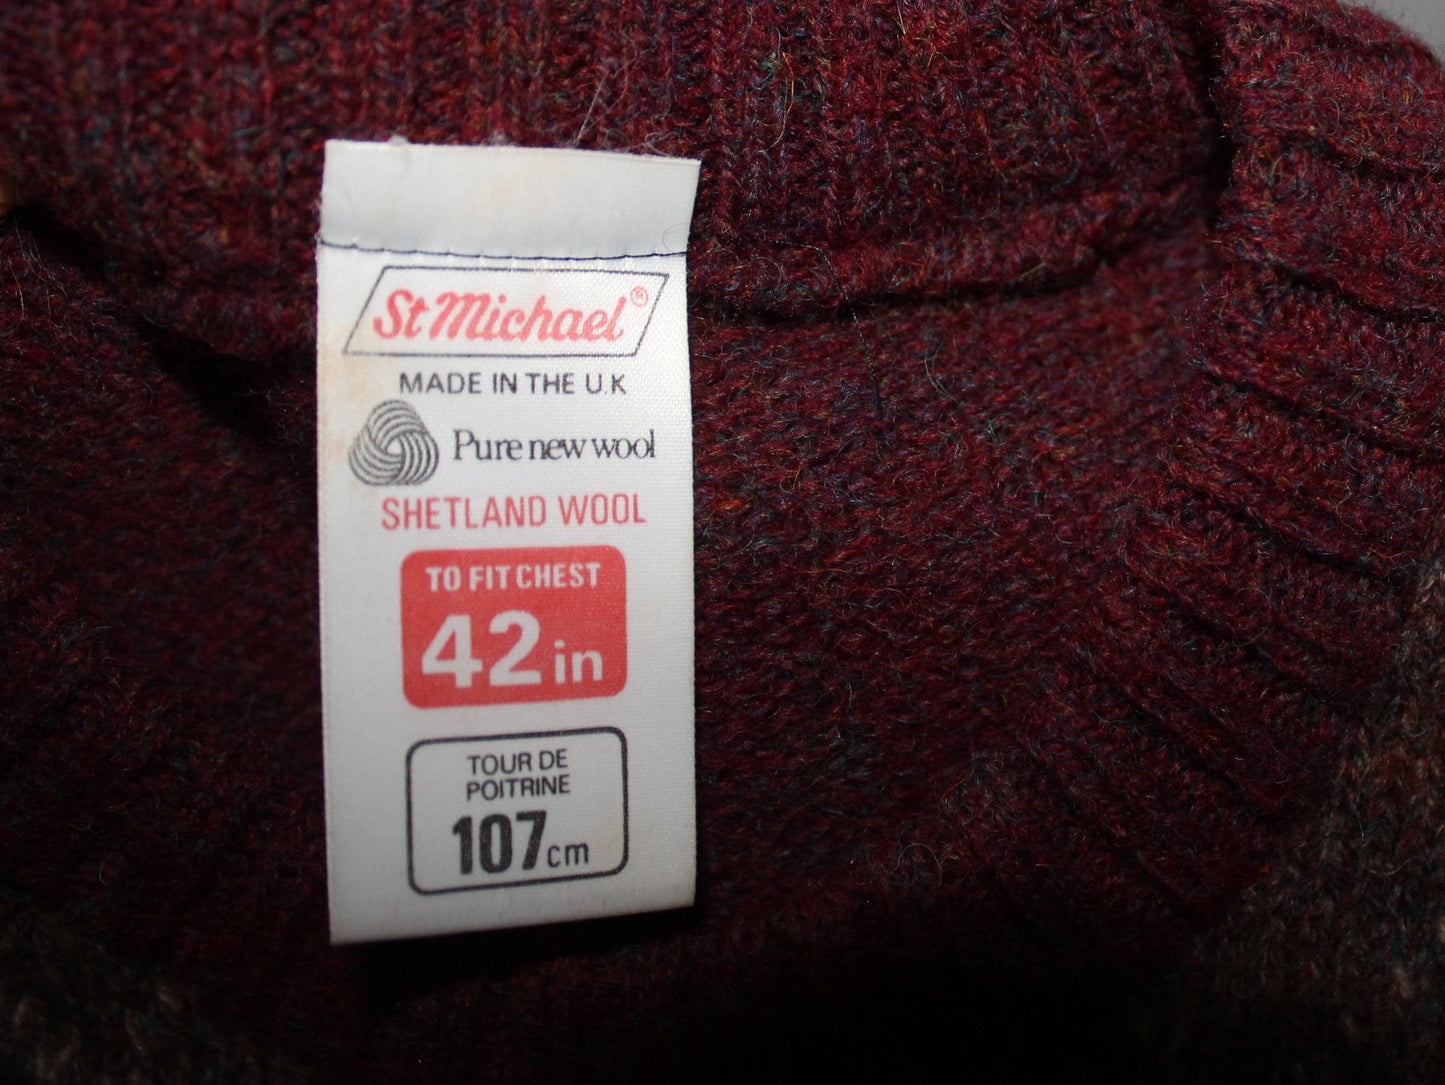 ST MICHAEL UK Sweater Pullover Jumper Maroon Argyle Pattern Size 42 Vintage Large